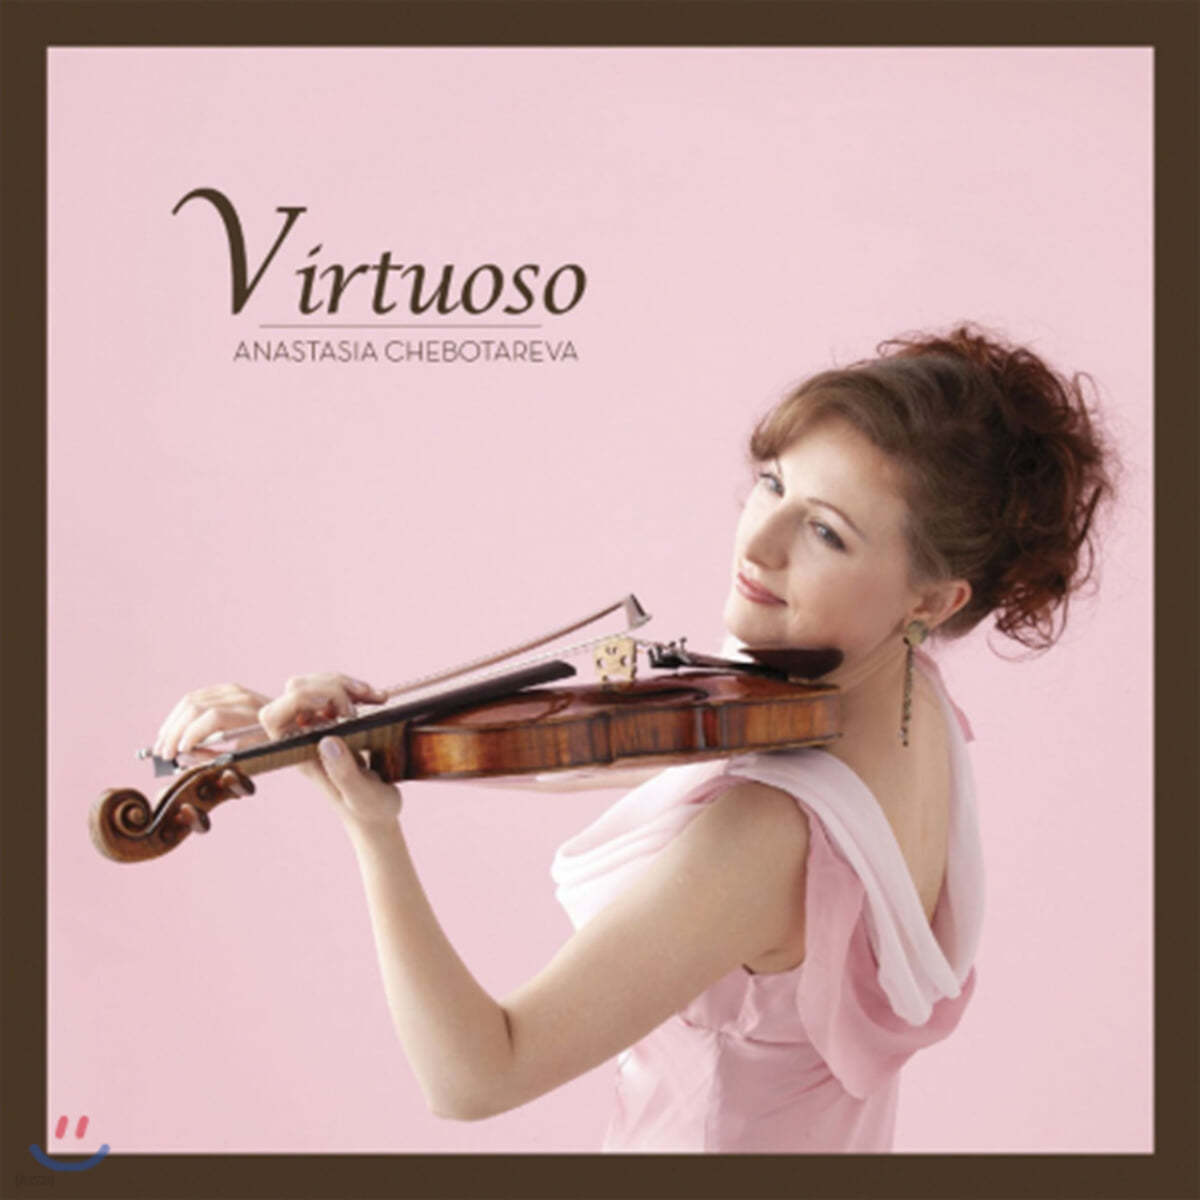 Anastasia Chebotareva 아나스타샤 체보타레바 바이올린 명 소품집 (Virtuoso) 